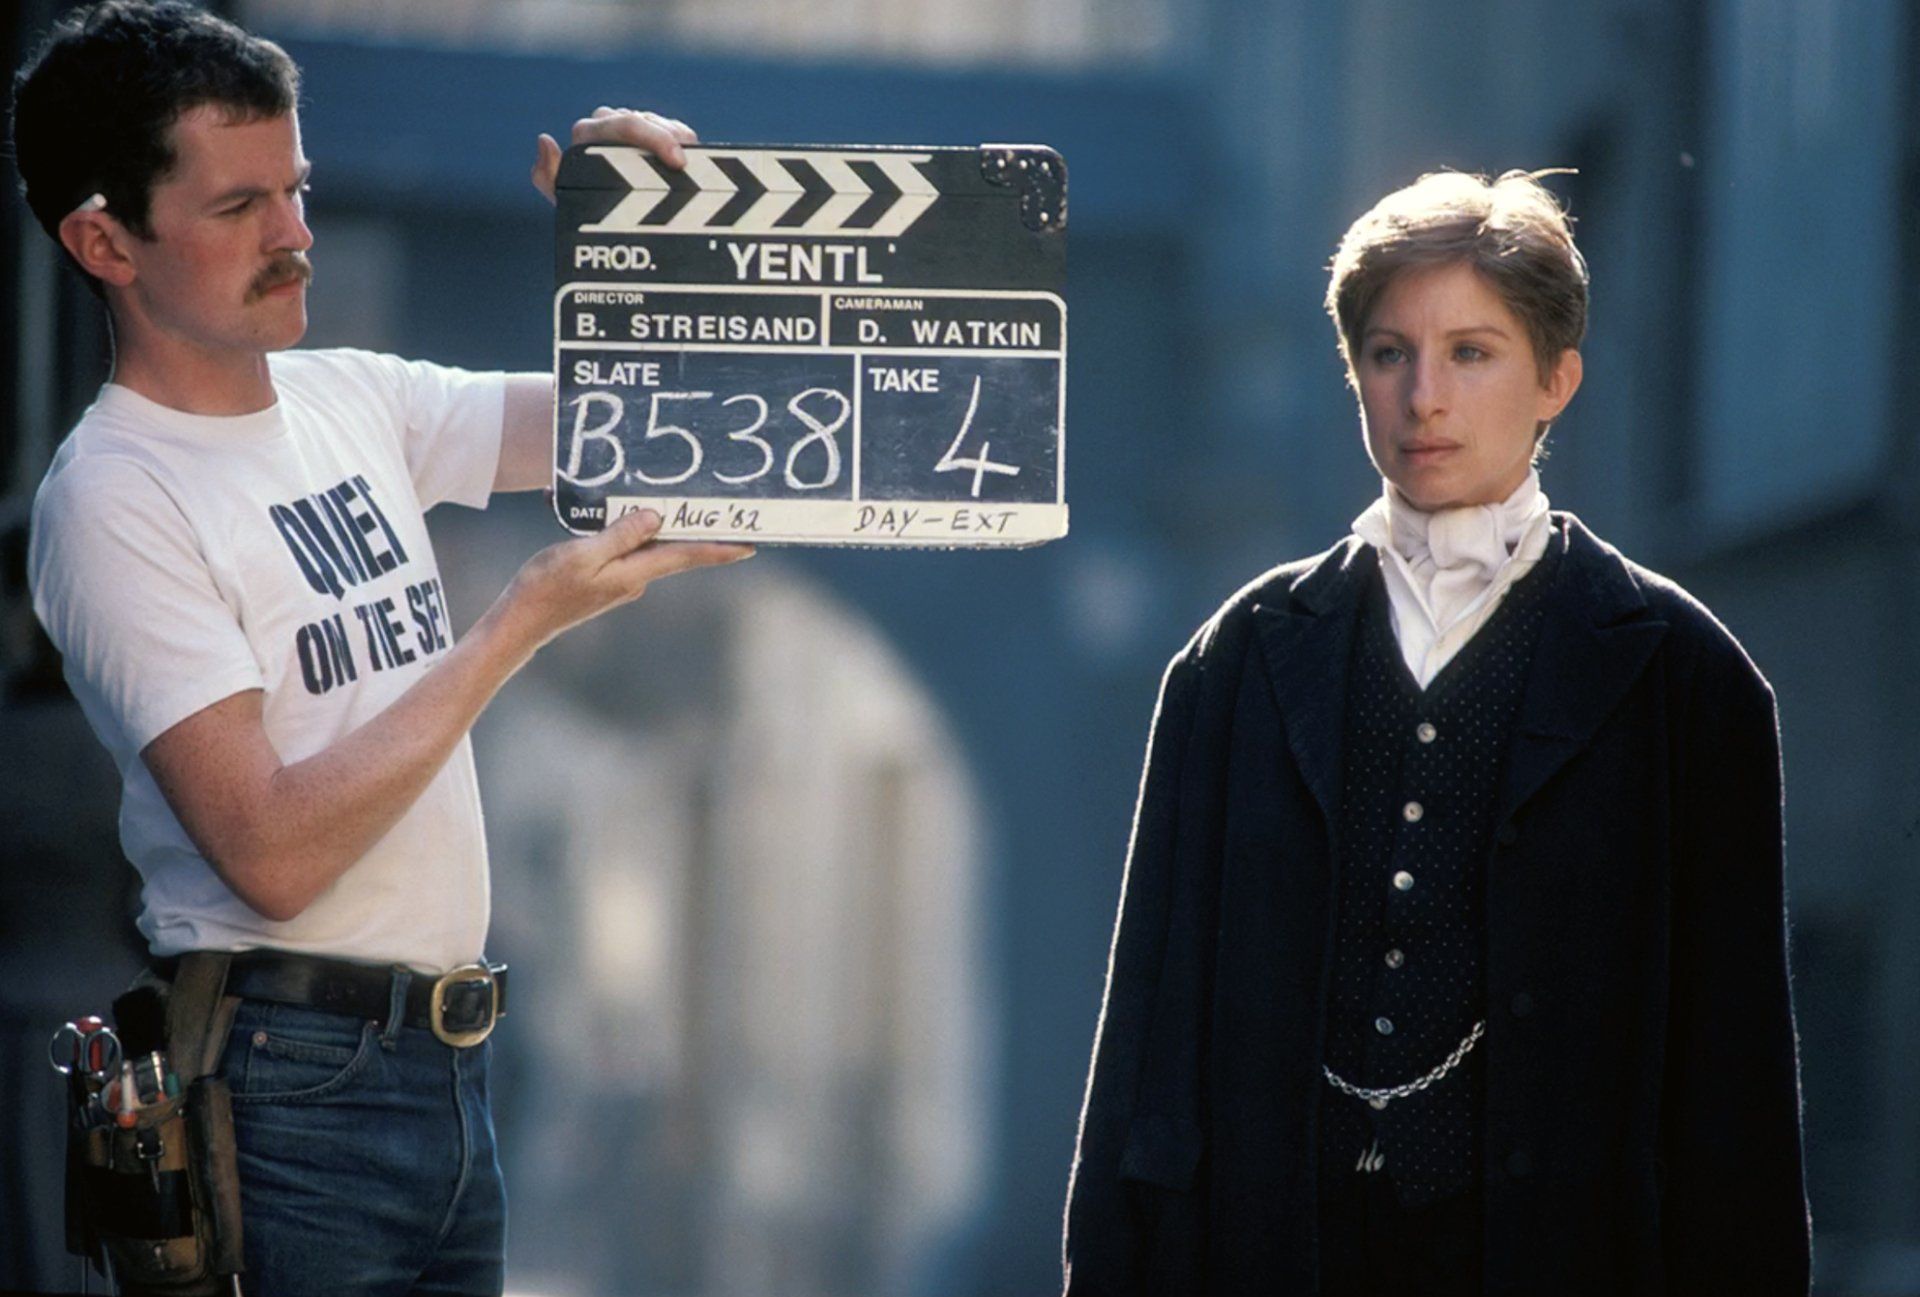 Barbra Streisand in front of the clapperboard, filming Yentl.